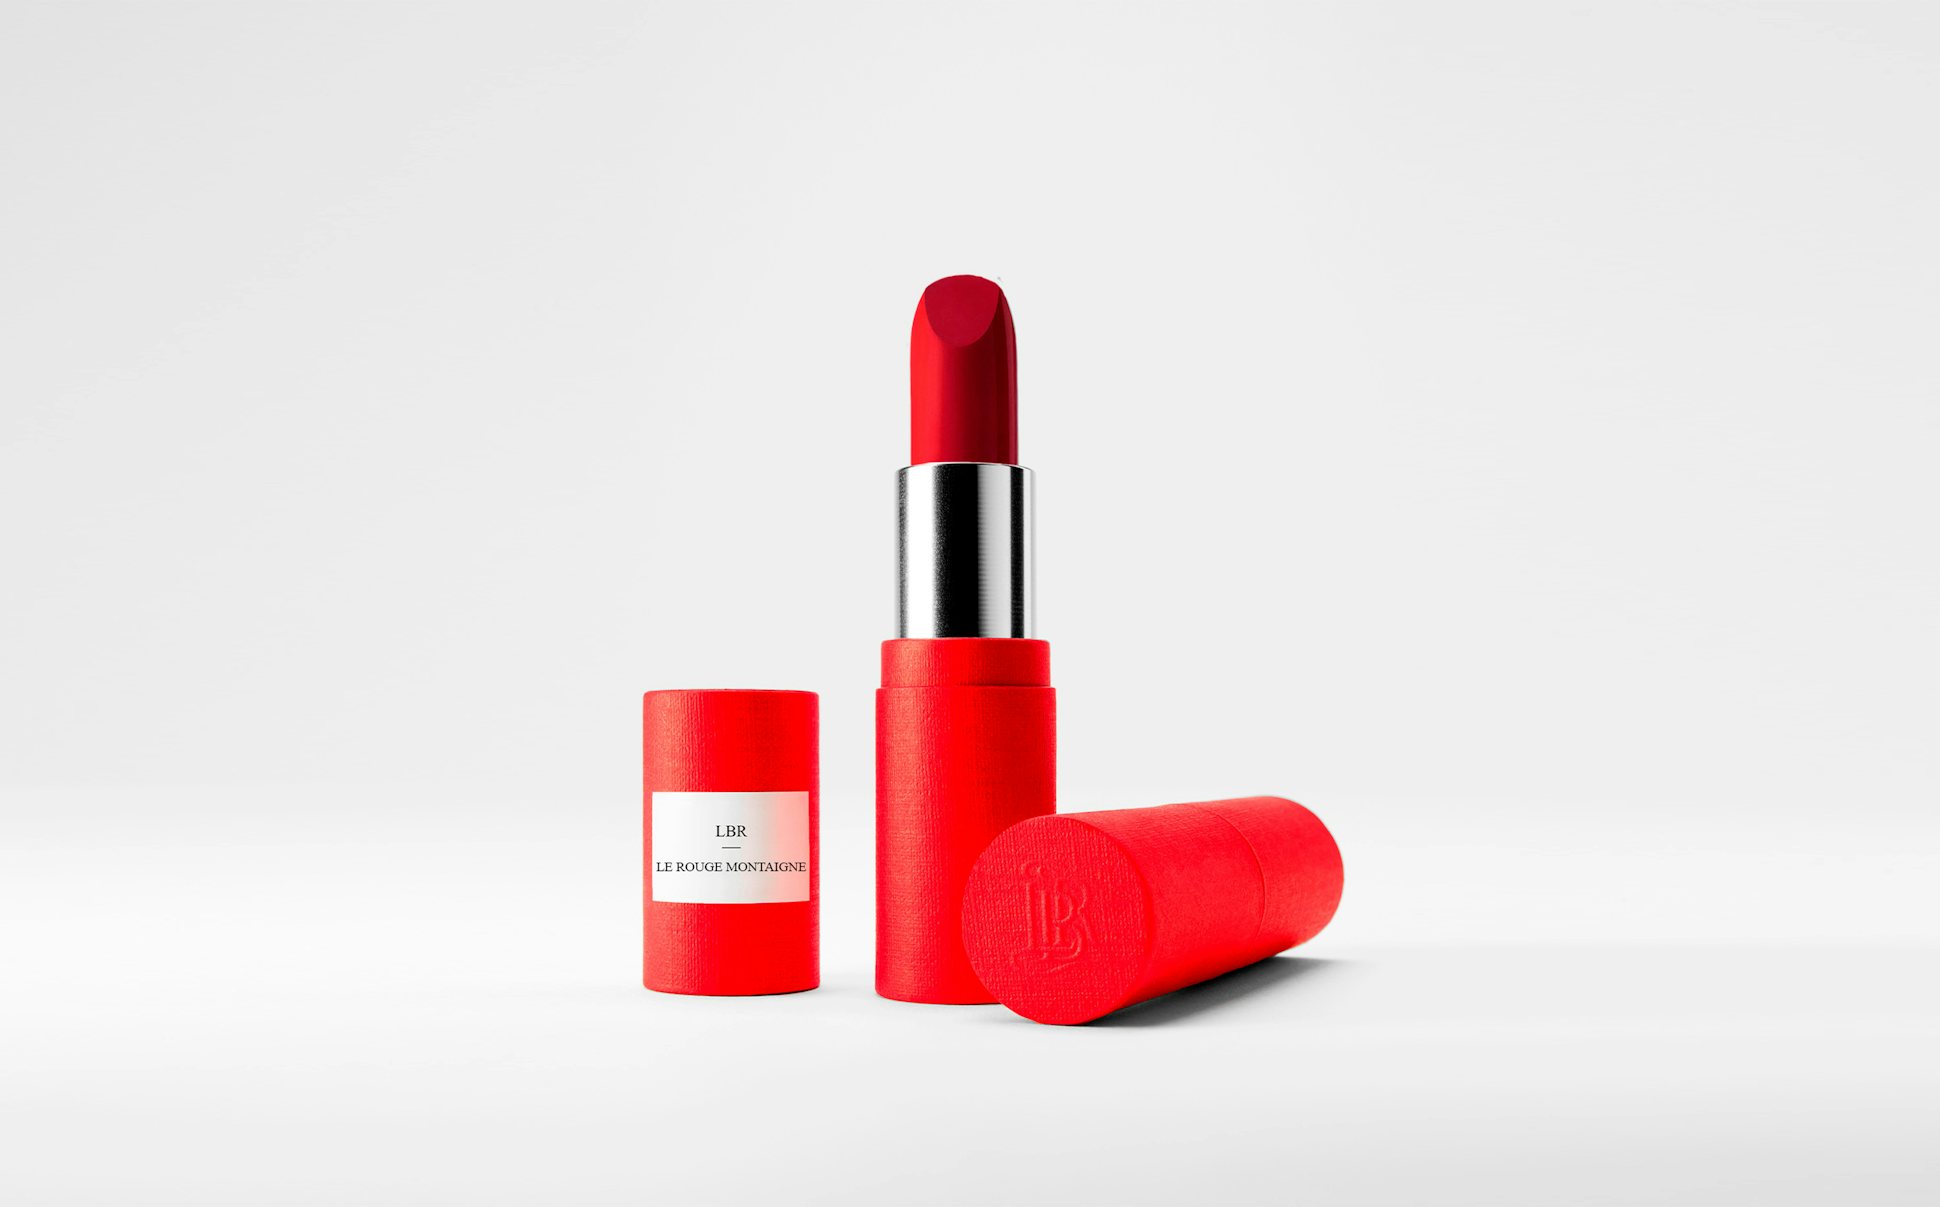 La bouche rouge Le Rouge Montaigne lipstick in the red paper case